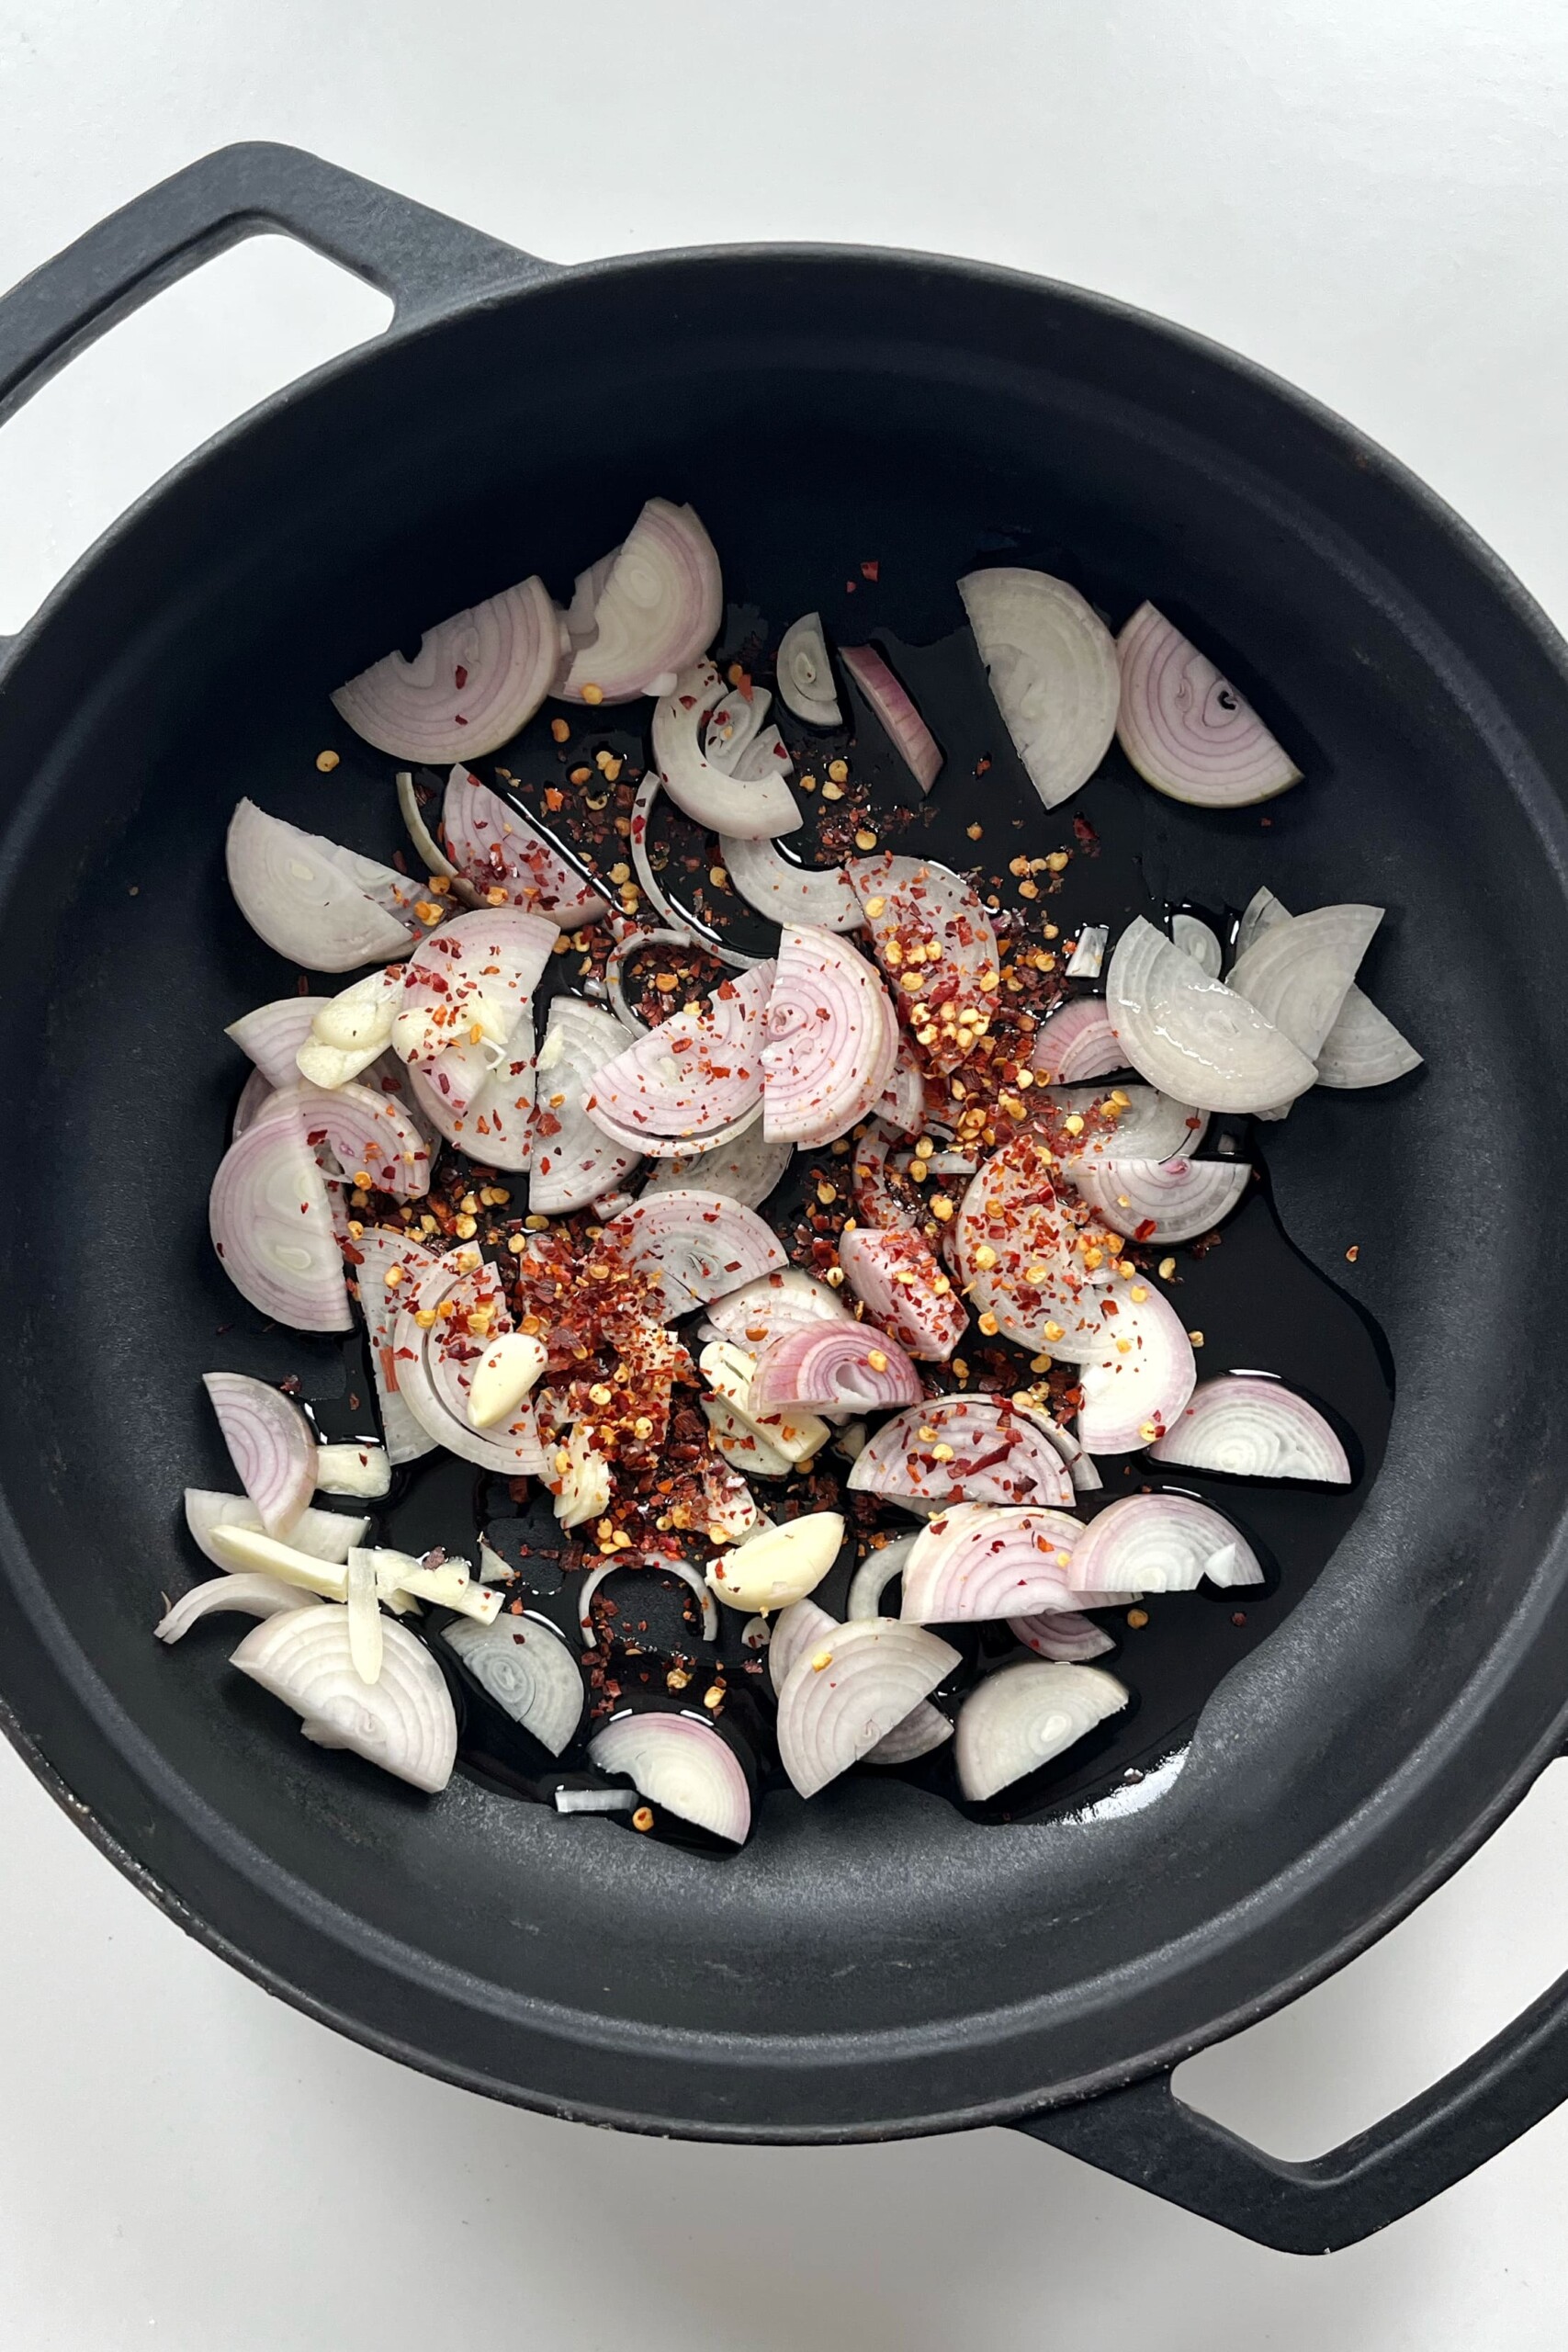 Frying shallots, garlic, chilli flakes in a black pan.